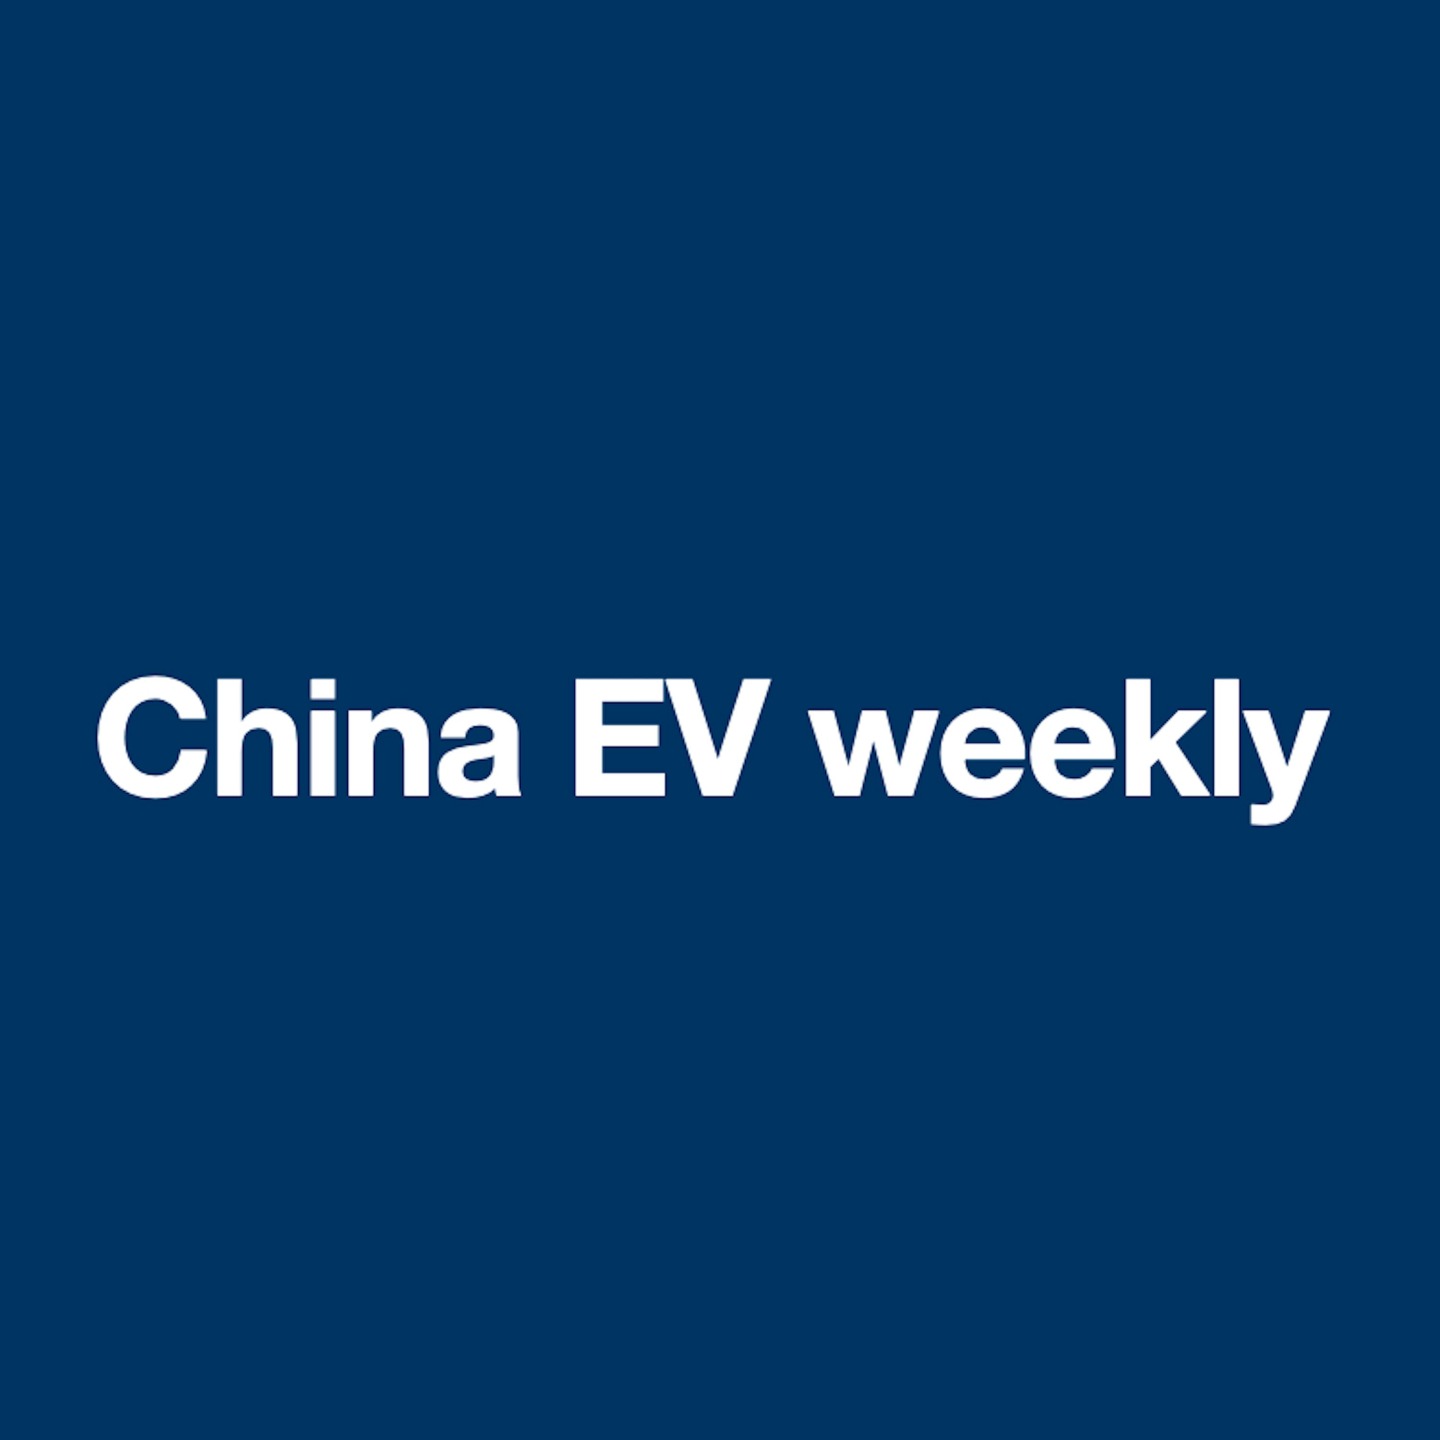 China EV news weekly